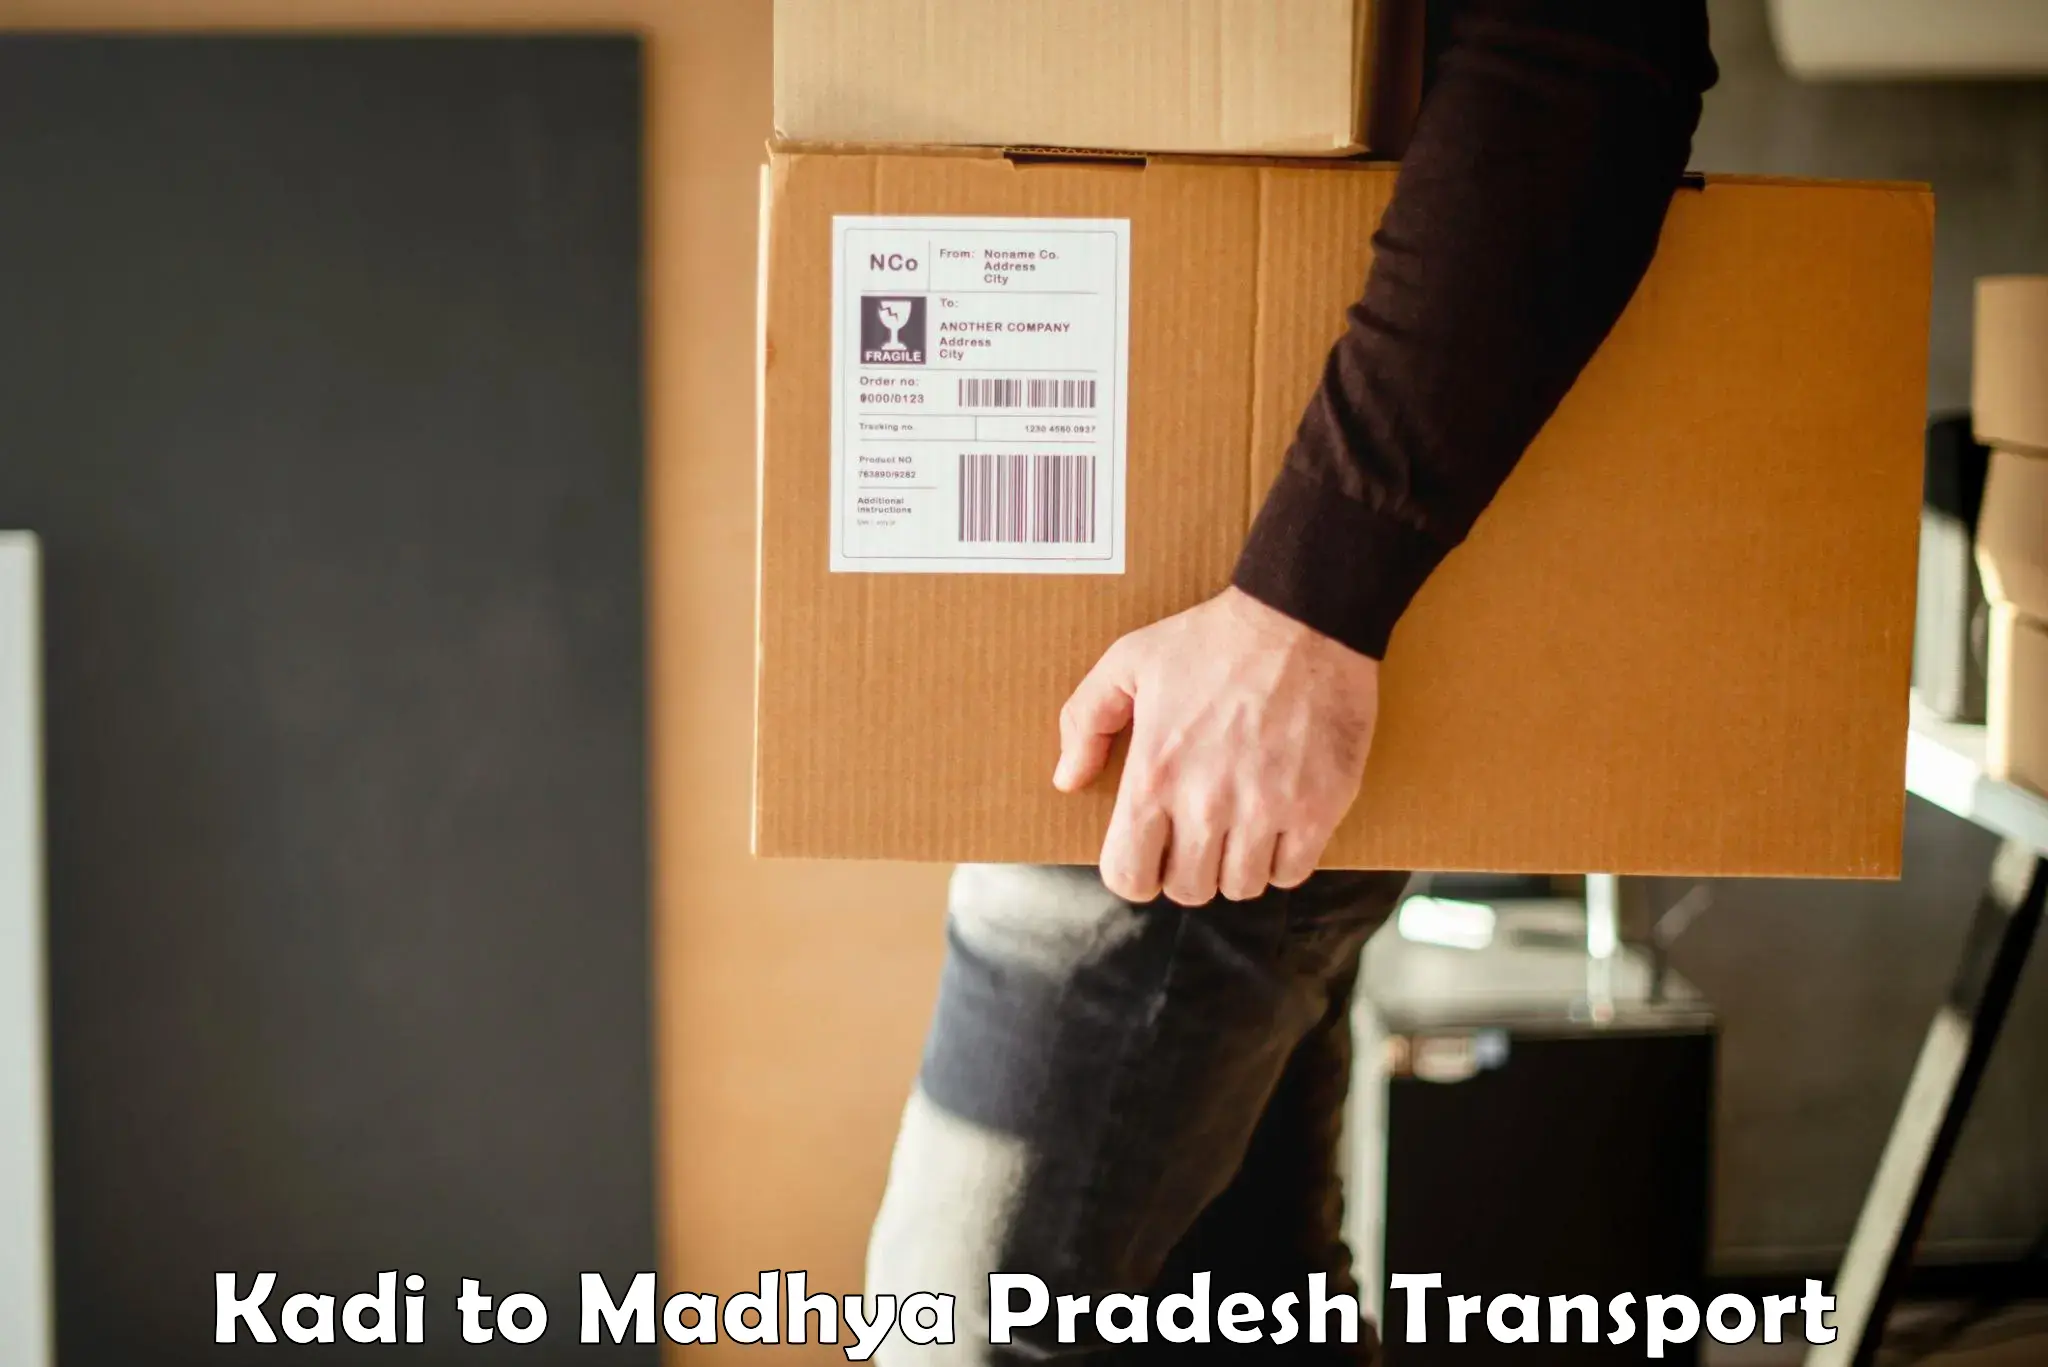 Delivery service Kadi to Mandideep